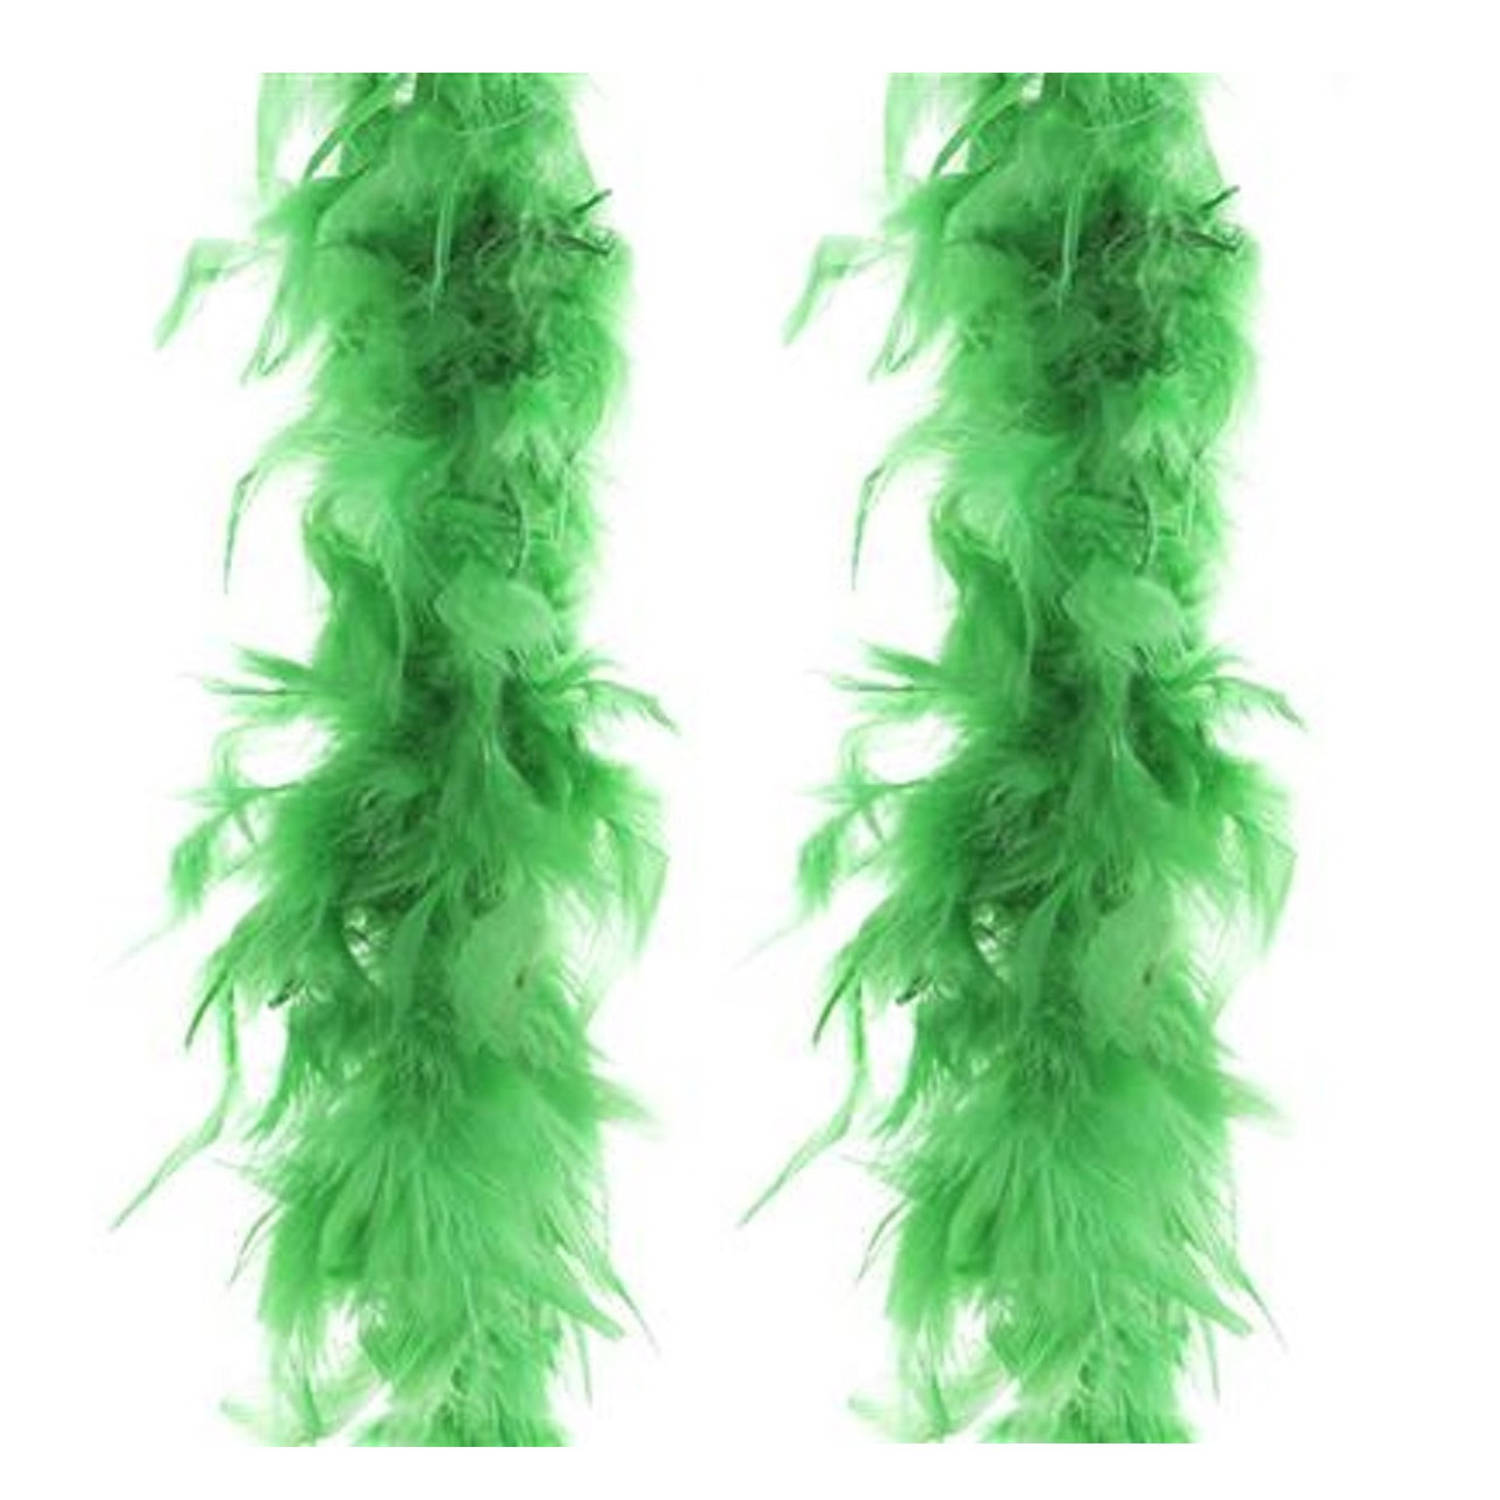 Oh jee Van Dapperheid Carnaval verkleed veren Boa kleur groen 2 meter - Verkleed boa | Blokker